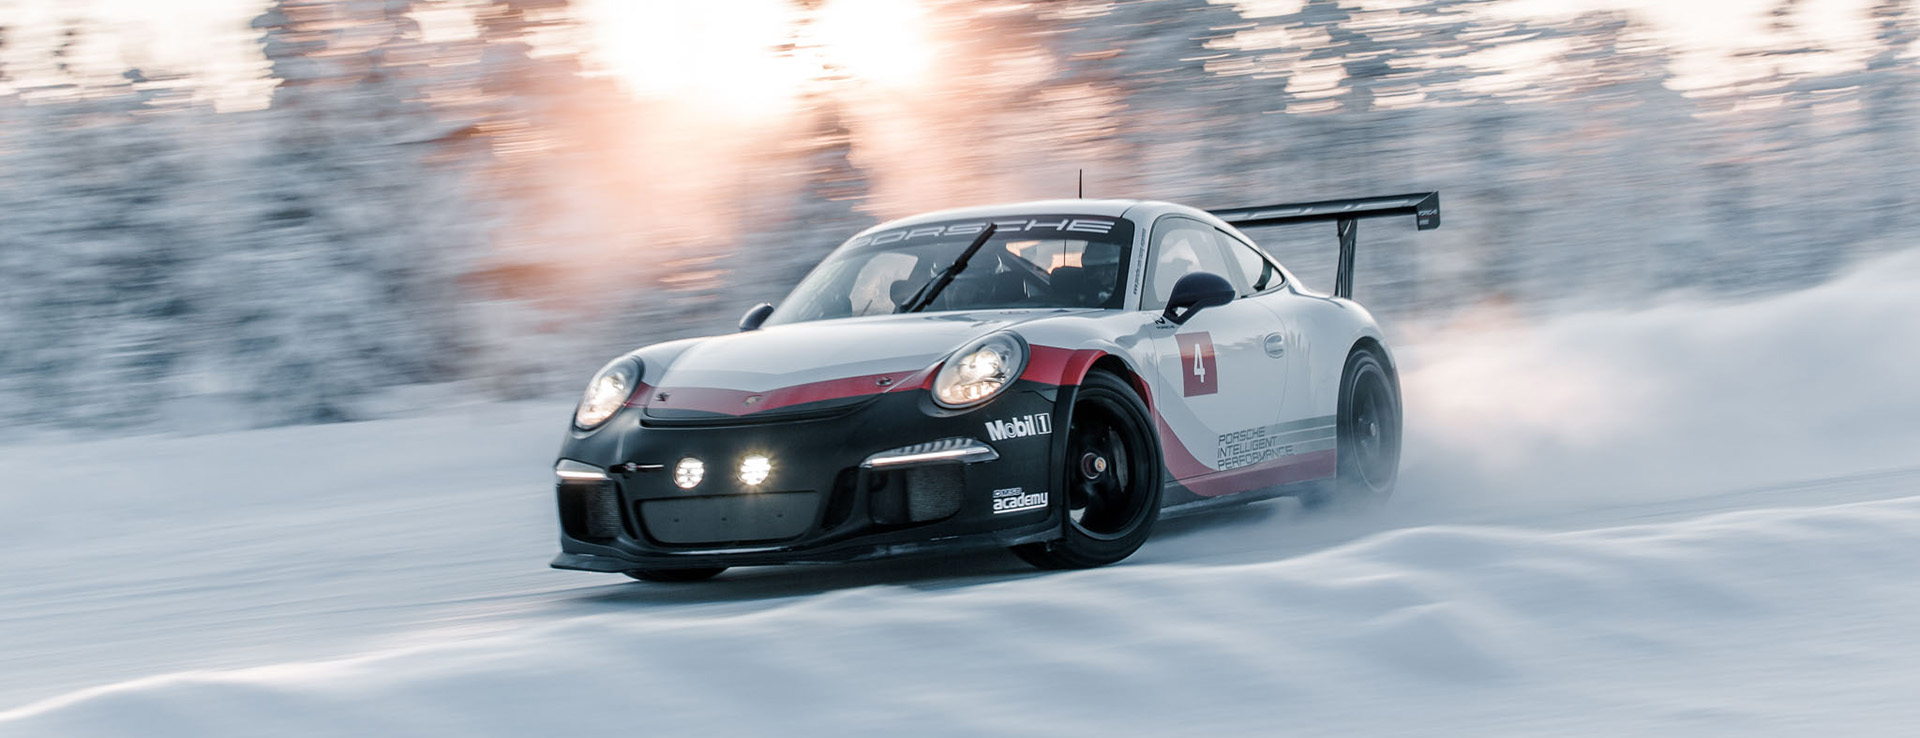 Porsche Ice Experience_Cup_W1_23_01_2019_0704_174145_1920x738px